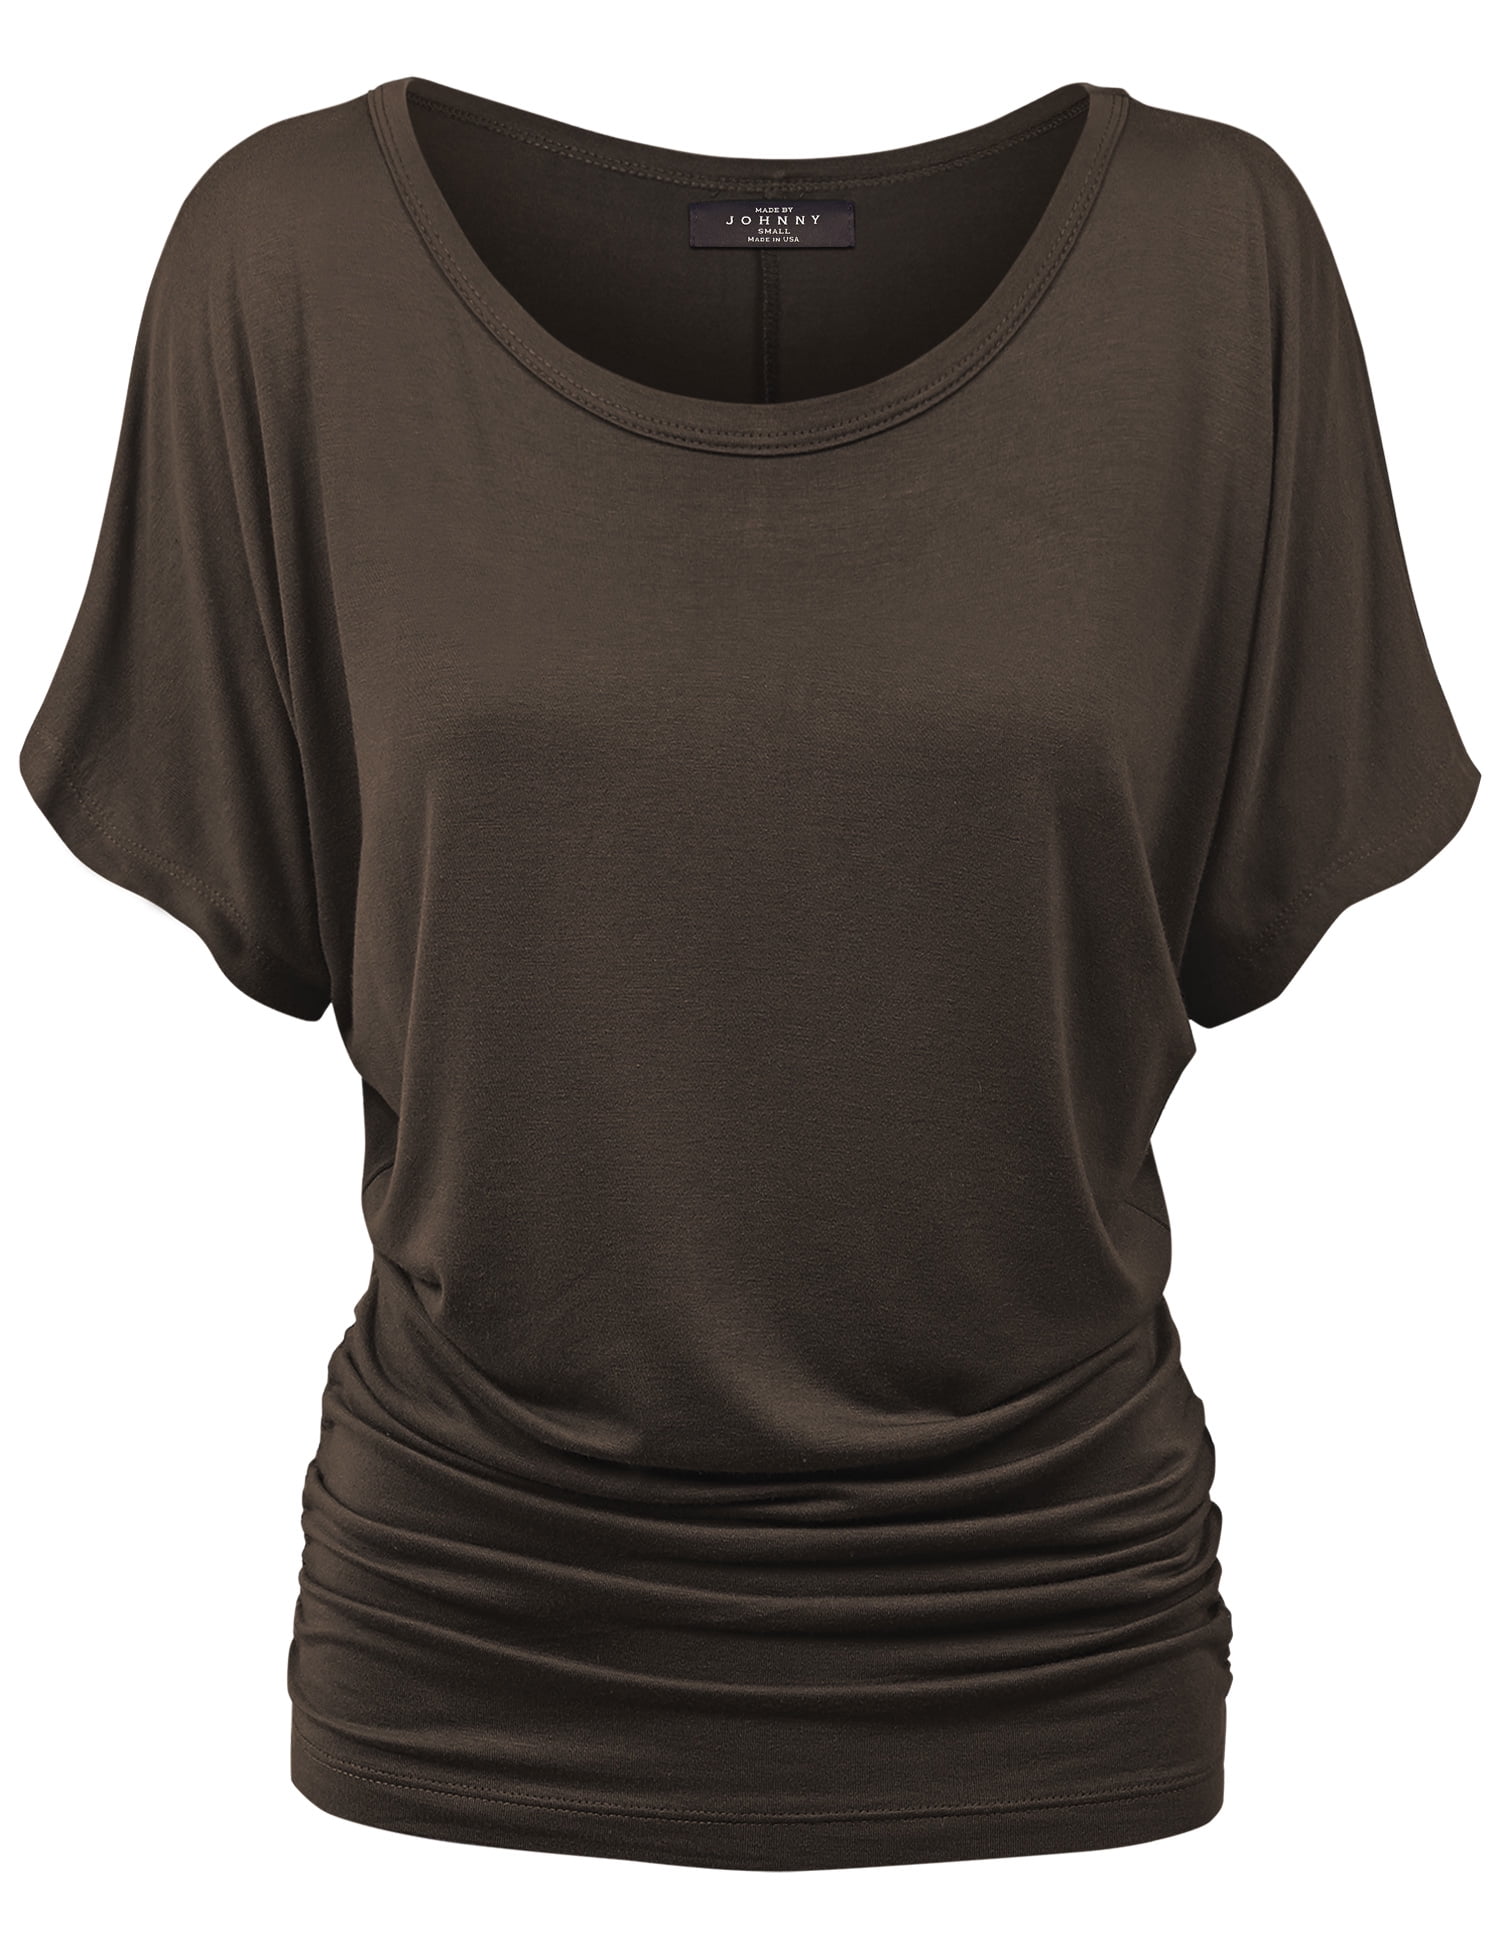 MBJ Womens Dolman Drape Top with Side Shirring - Walmart.com